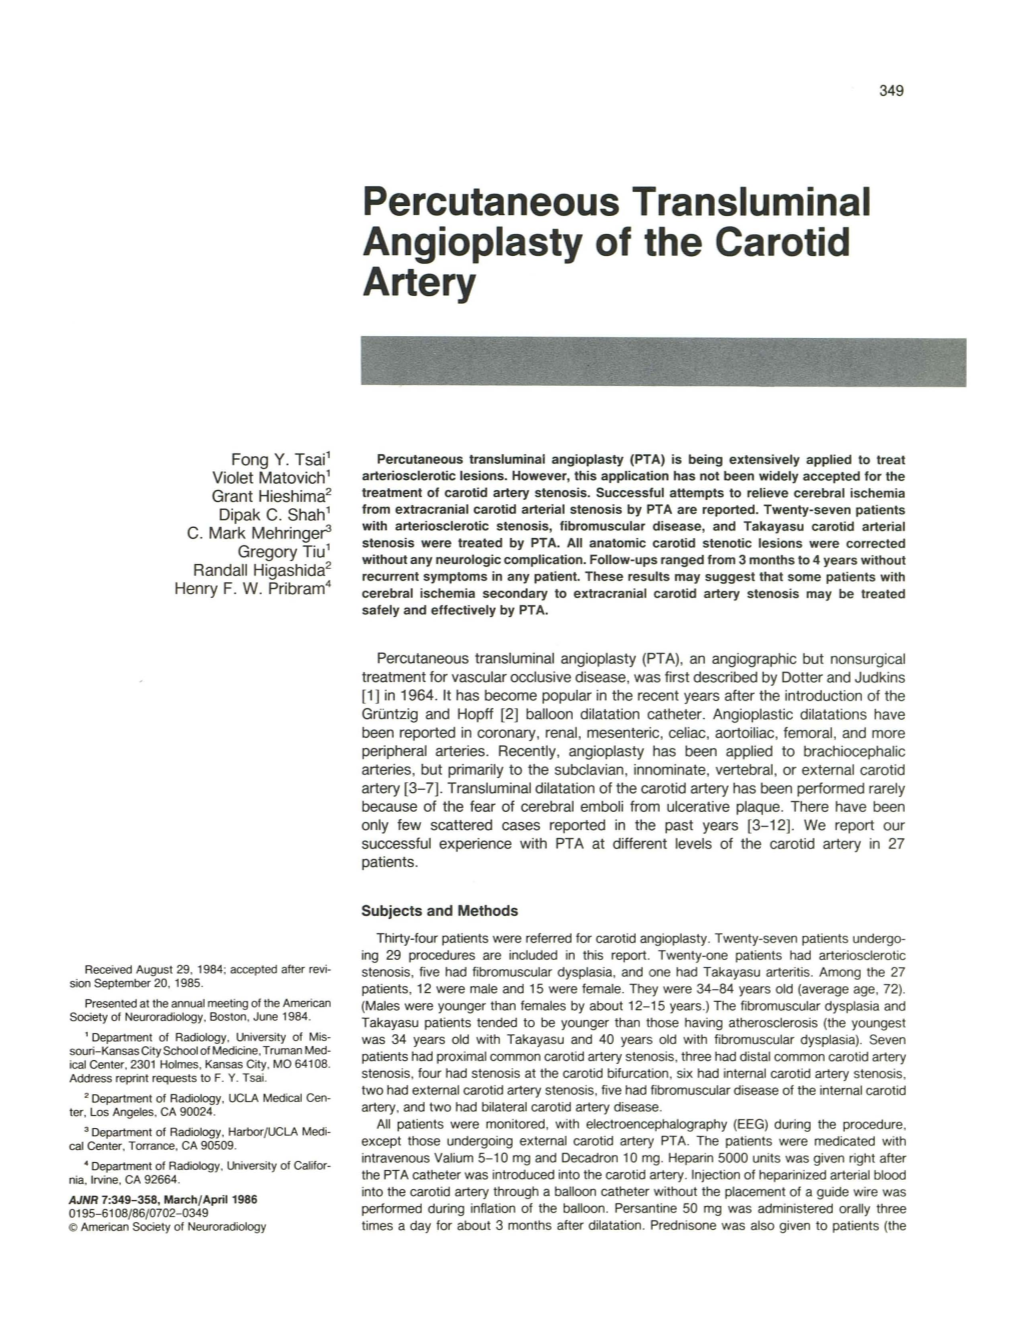 Percutaneous Transluminal Angioplasty of the Carotid Artery